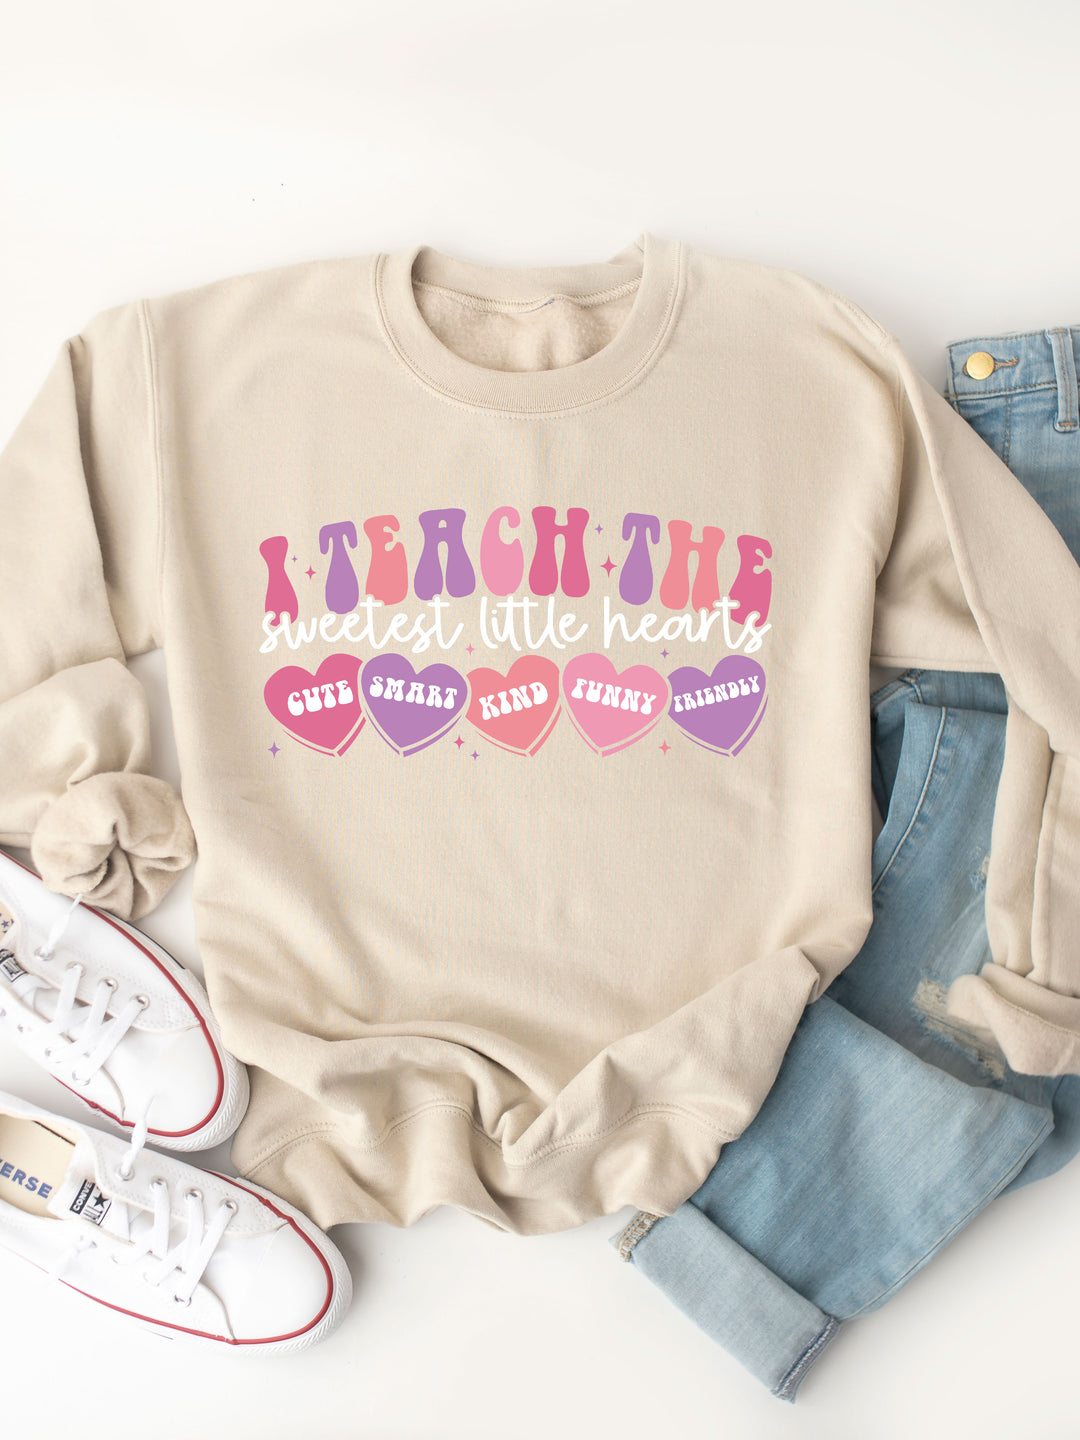 Teach the sweetest little hearts Graphic Sweatshirt